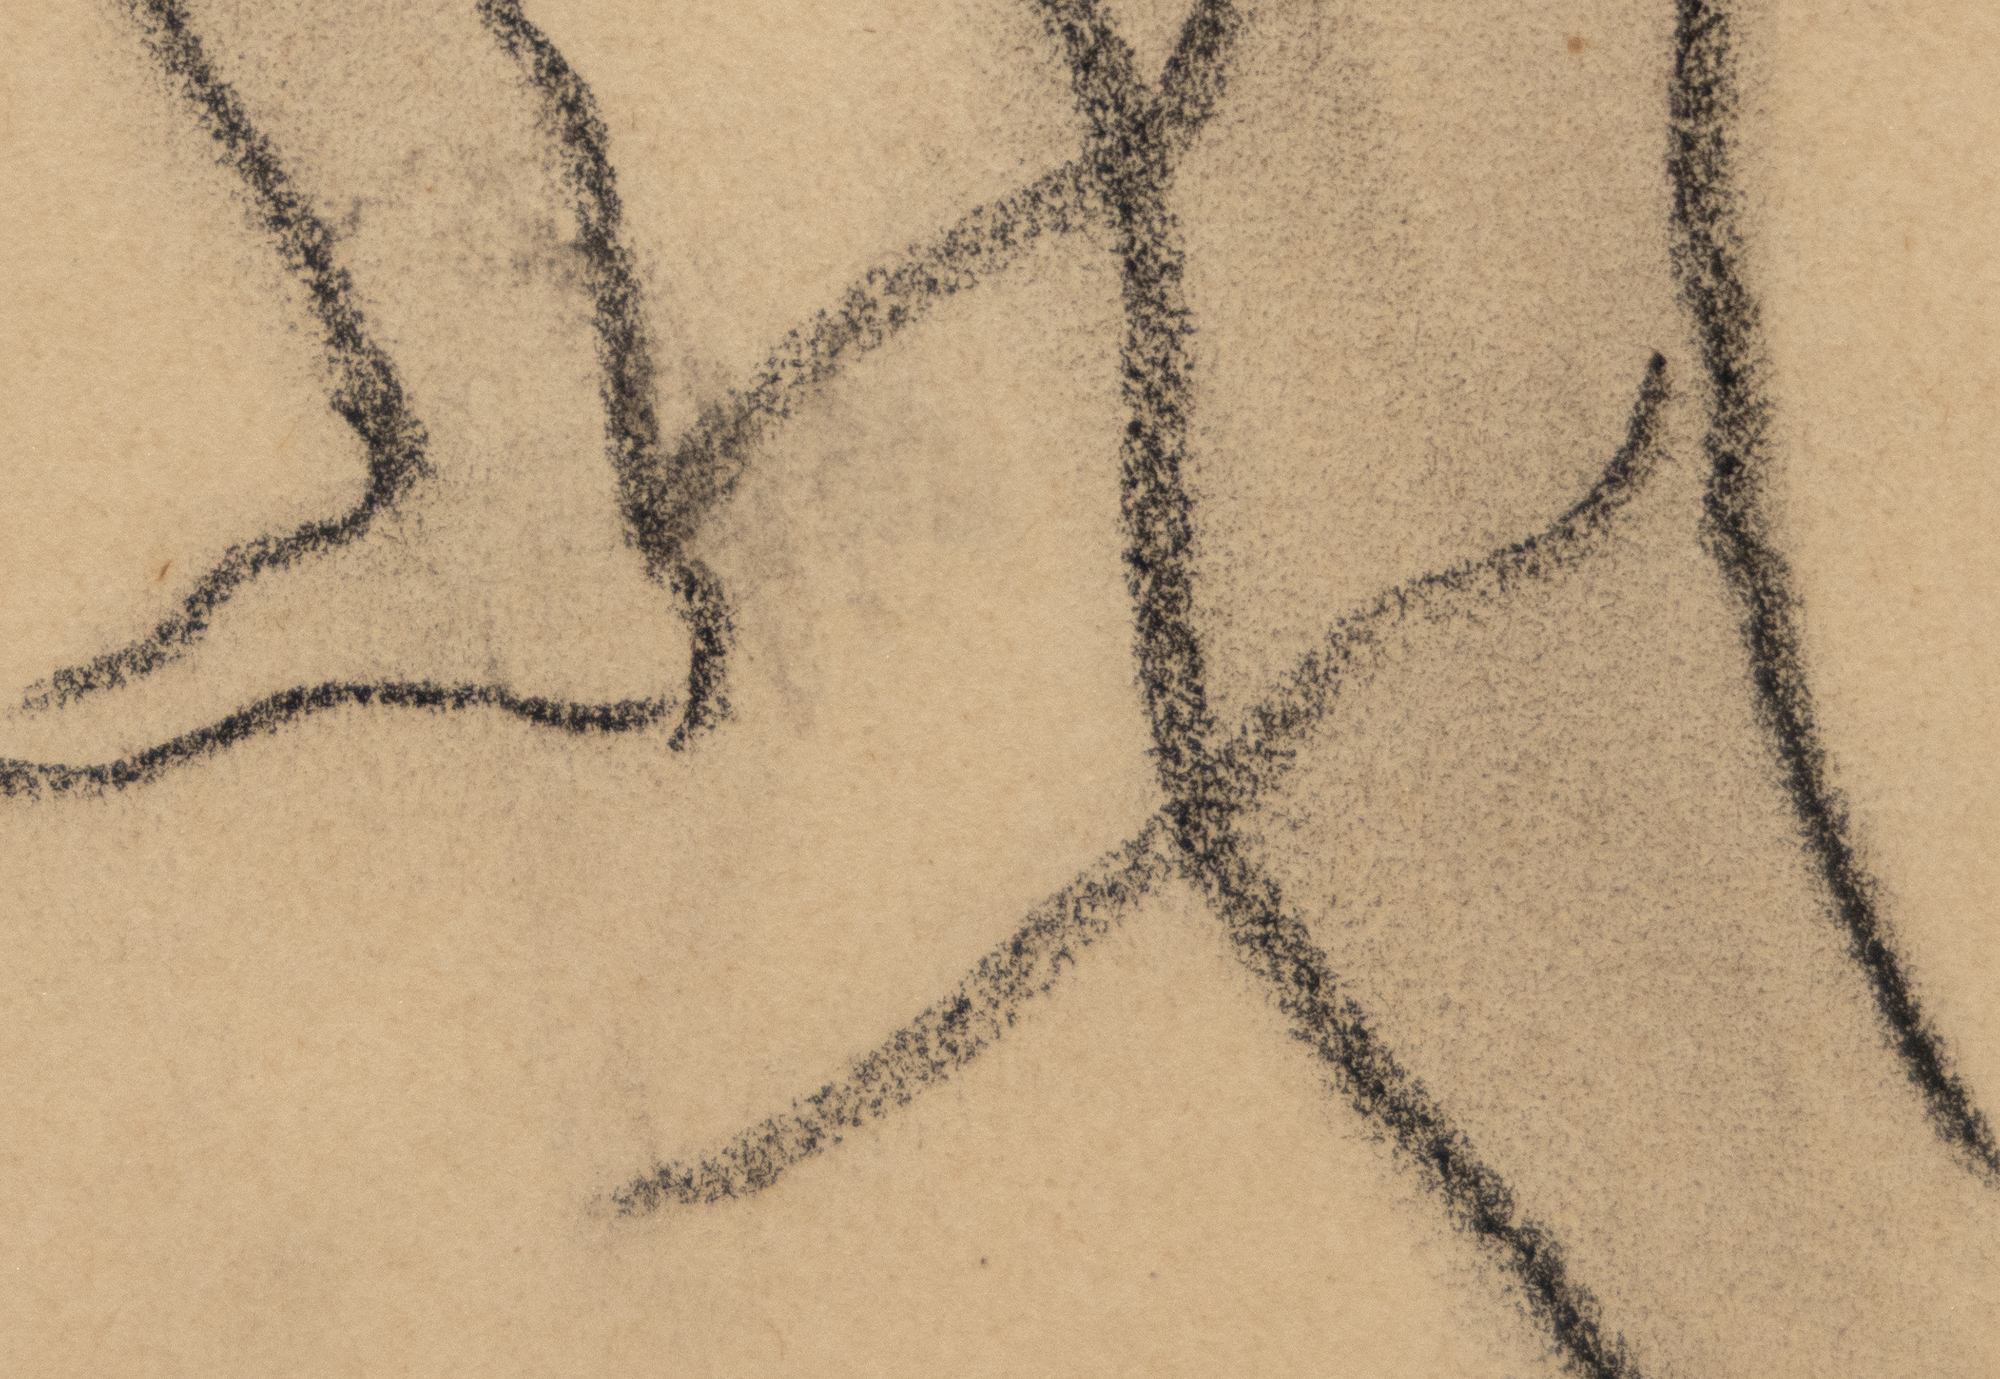 FRANCIS PICABIA - Trois personnages nus - schwarze Konterfei-Kreide auf chamoisfarbenem Papier - 11 1/2 x 8 in.